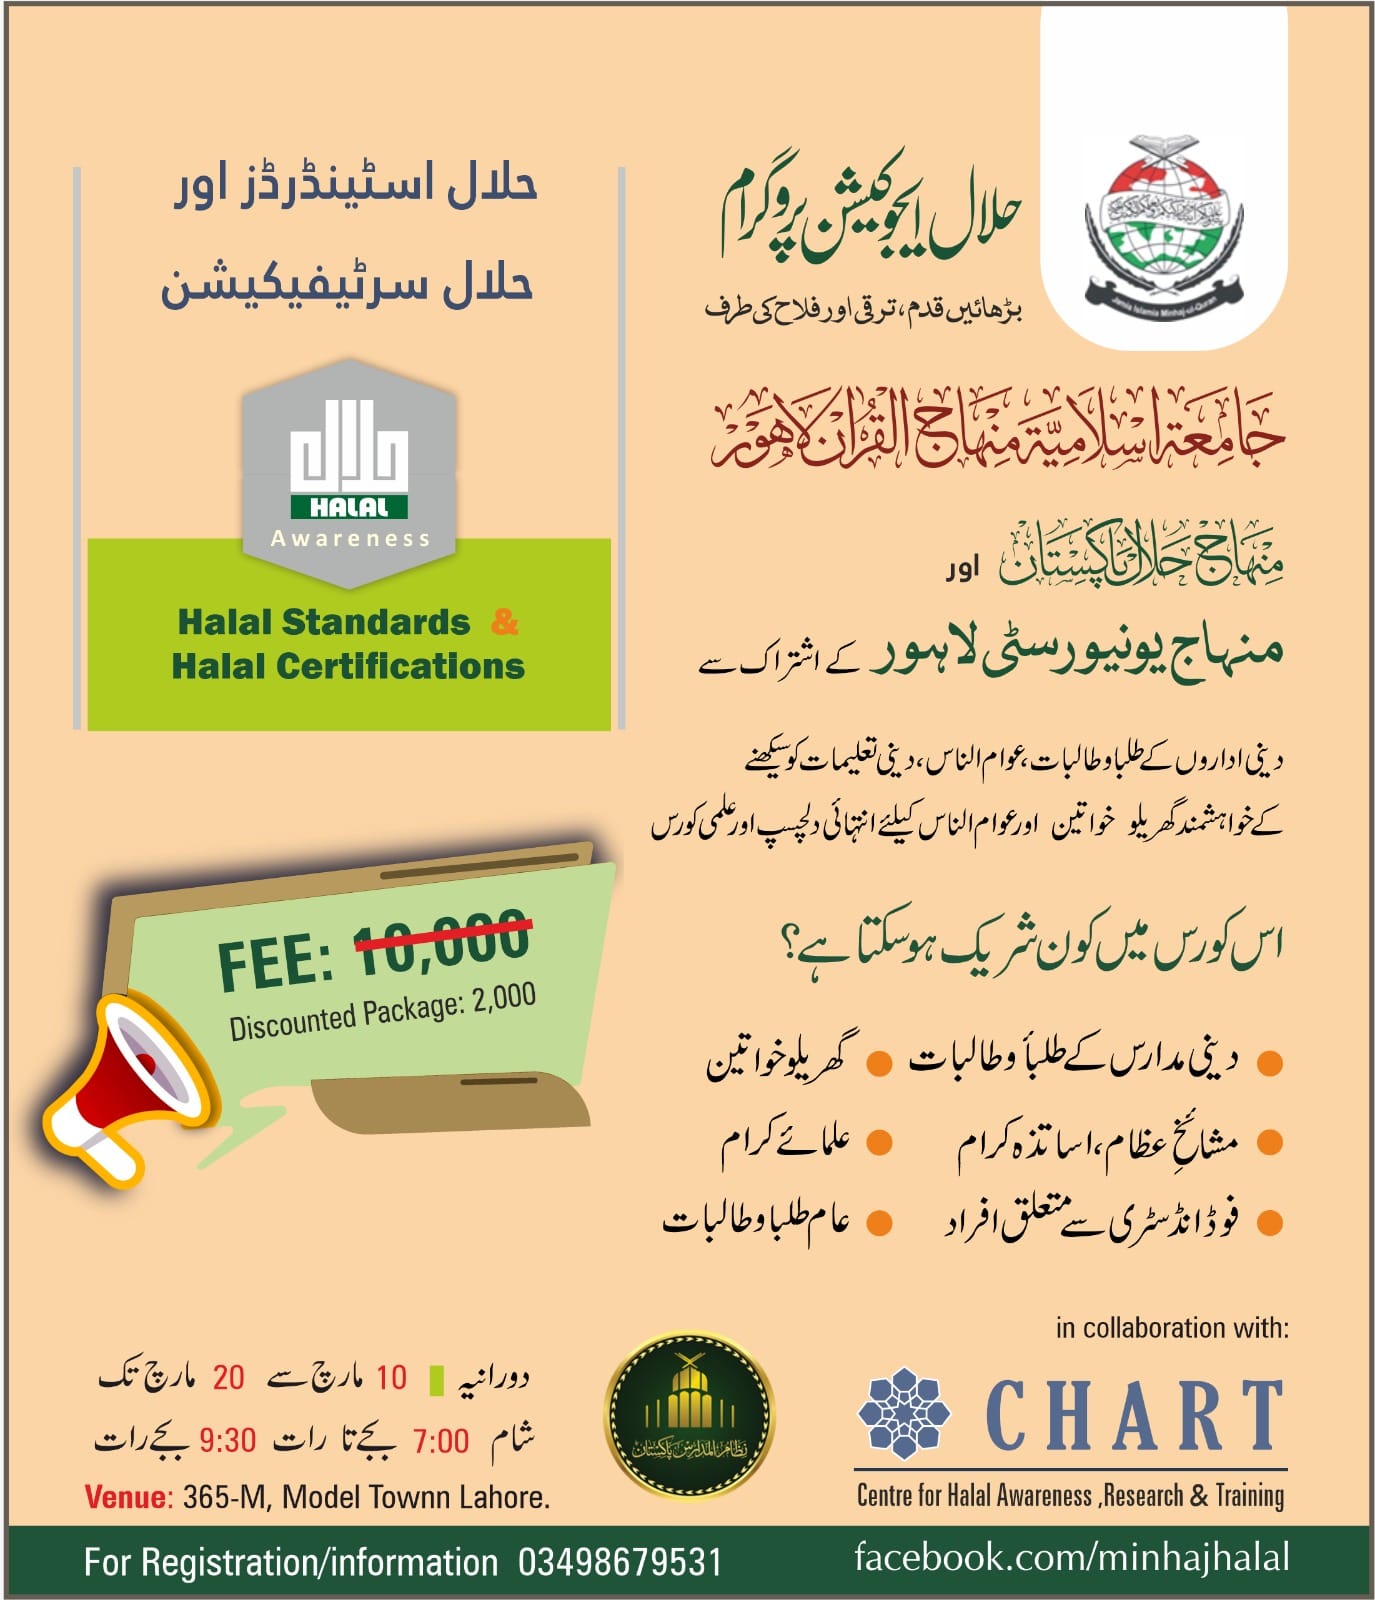 Launch of Halal Education Program in collaboration with Minhaj University